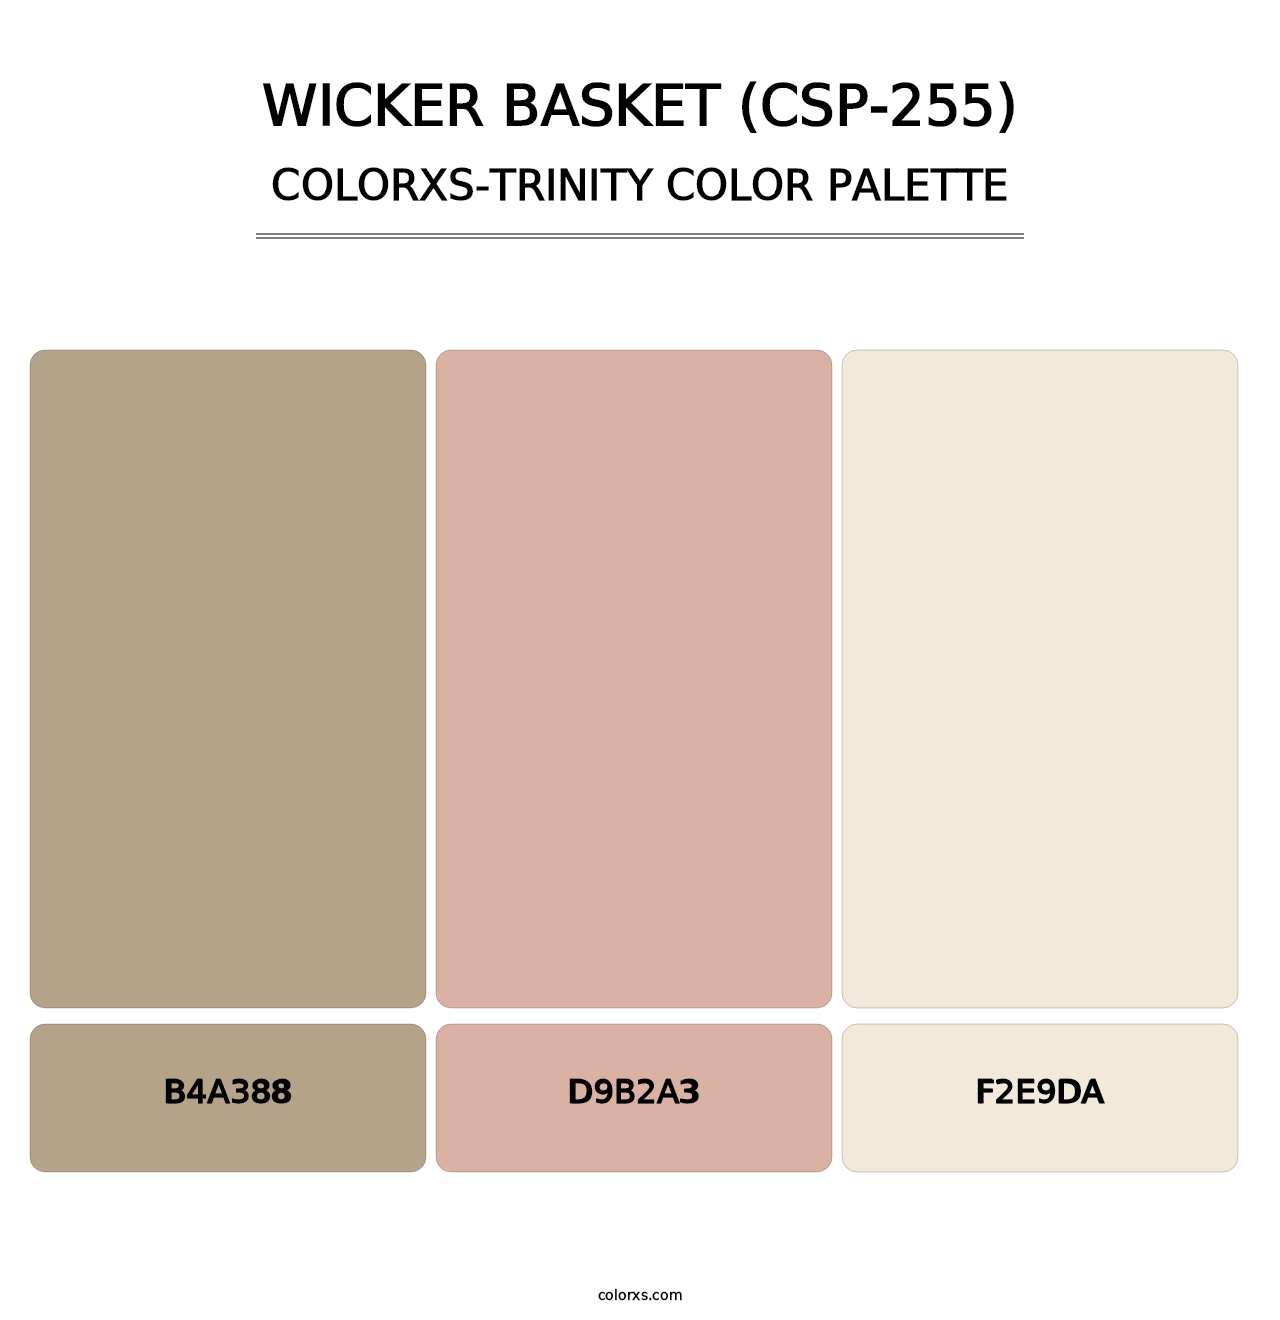 Wicker Basket (CSP-255) - Colorxs Trinity Palette